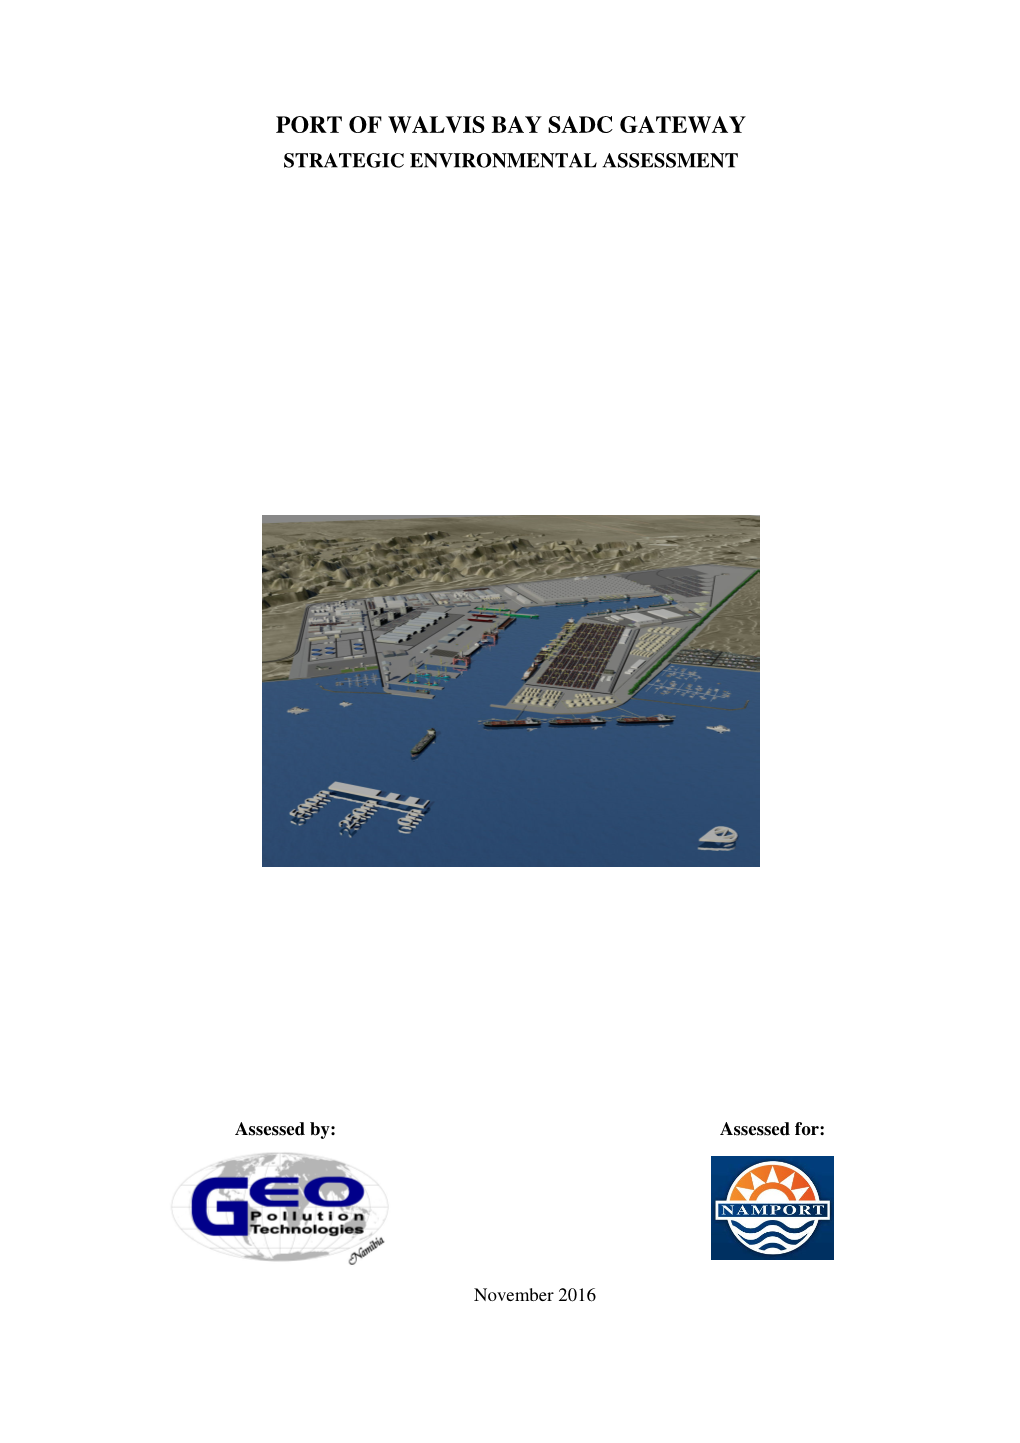 Port of Walvis Bay Sadc Gateway Strategic Environmental Assessment